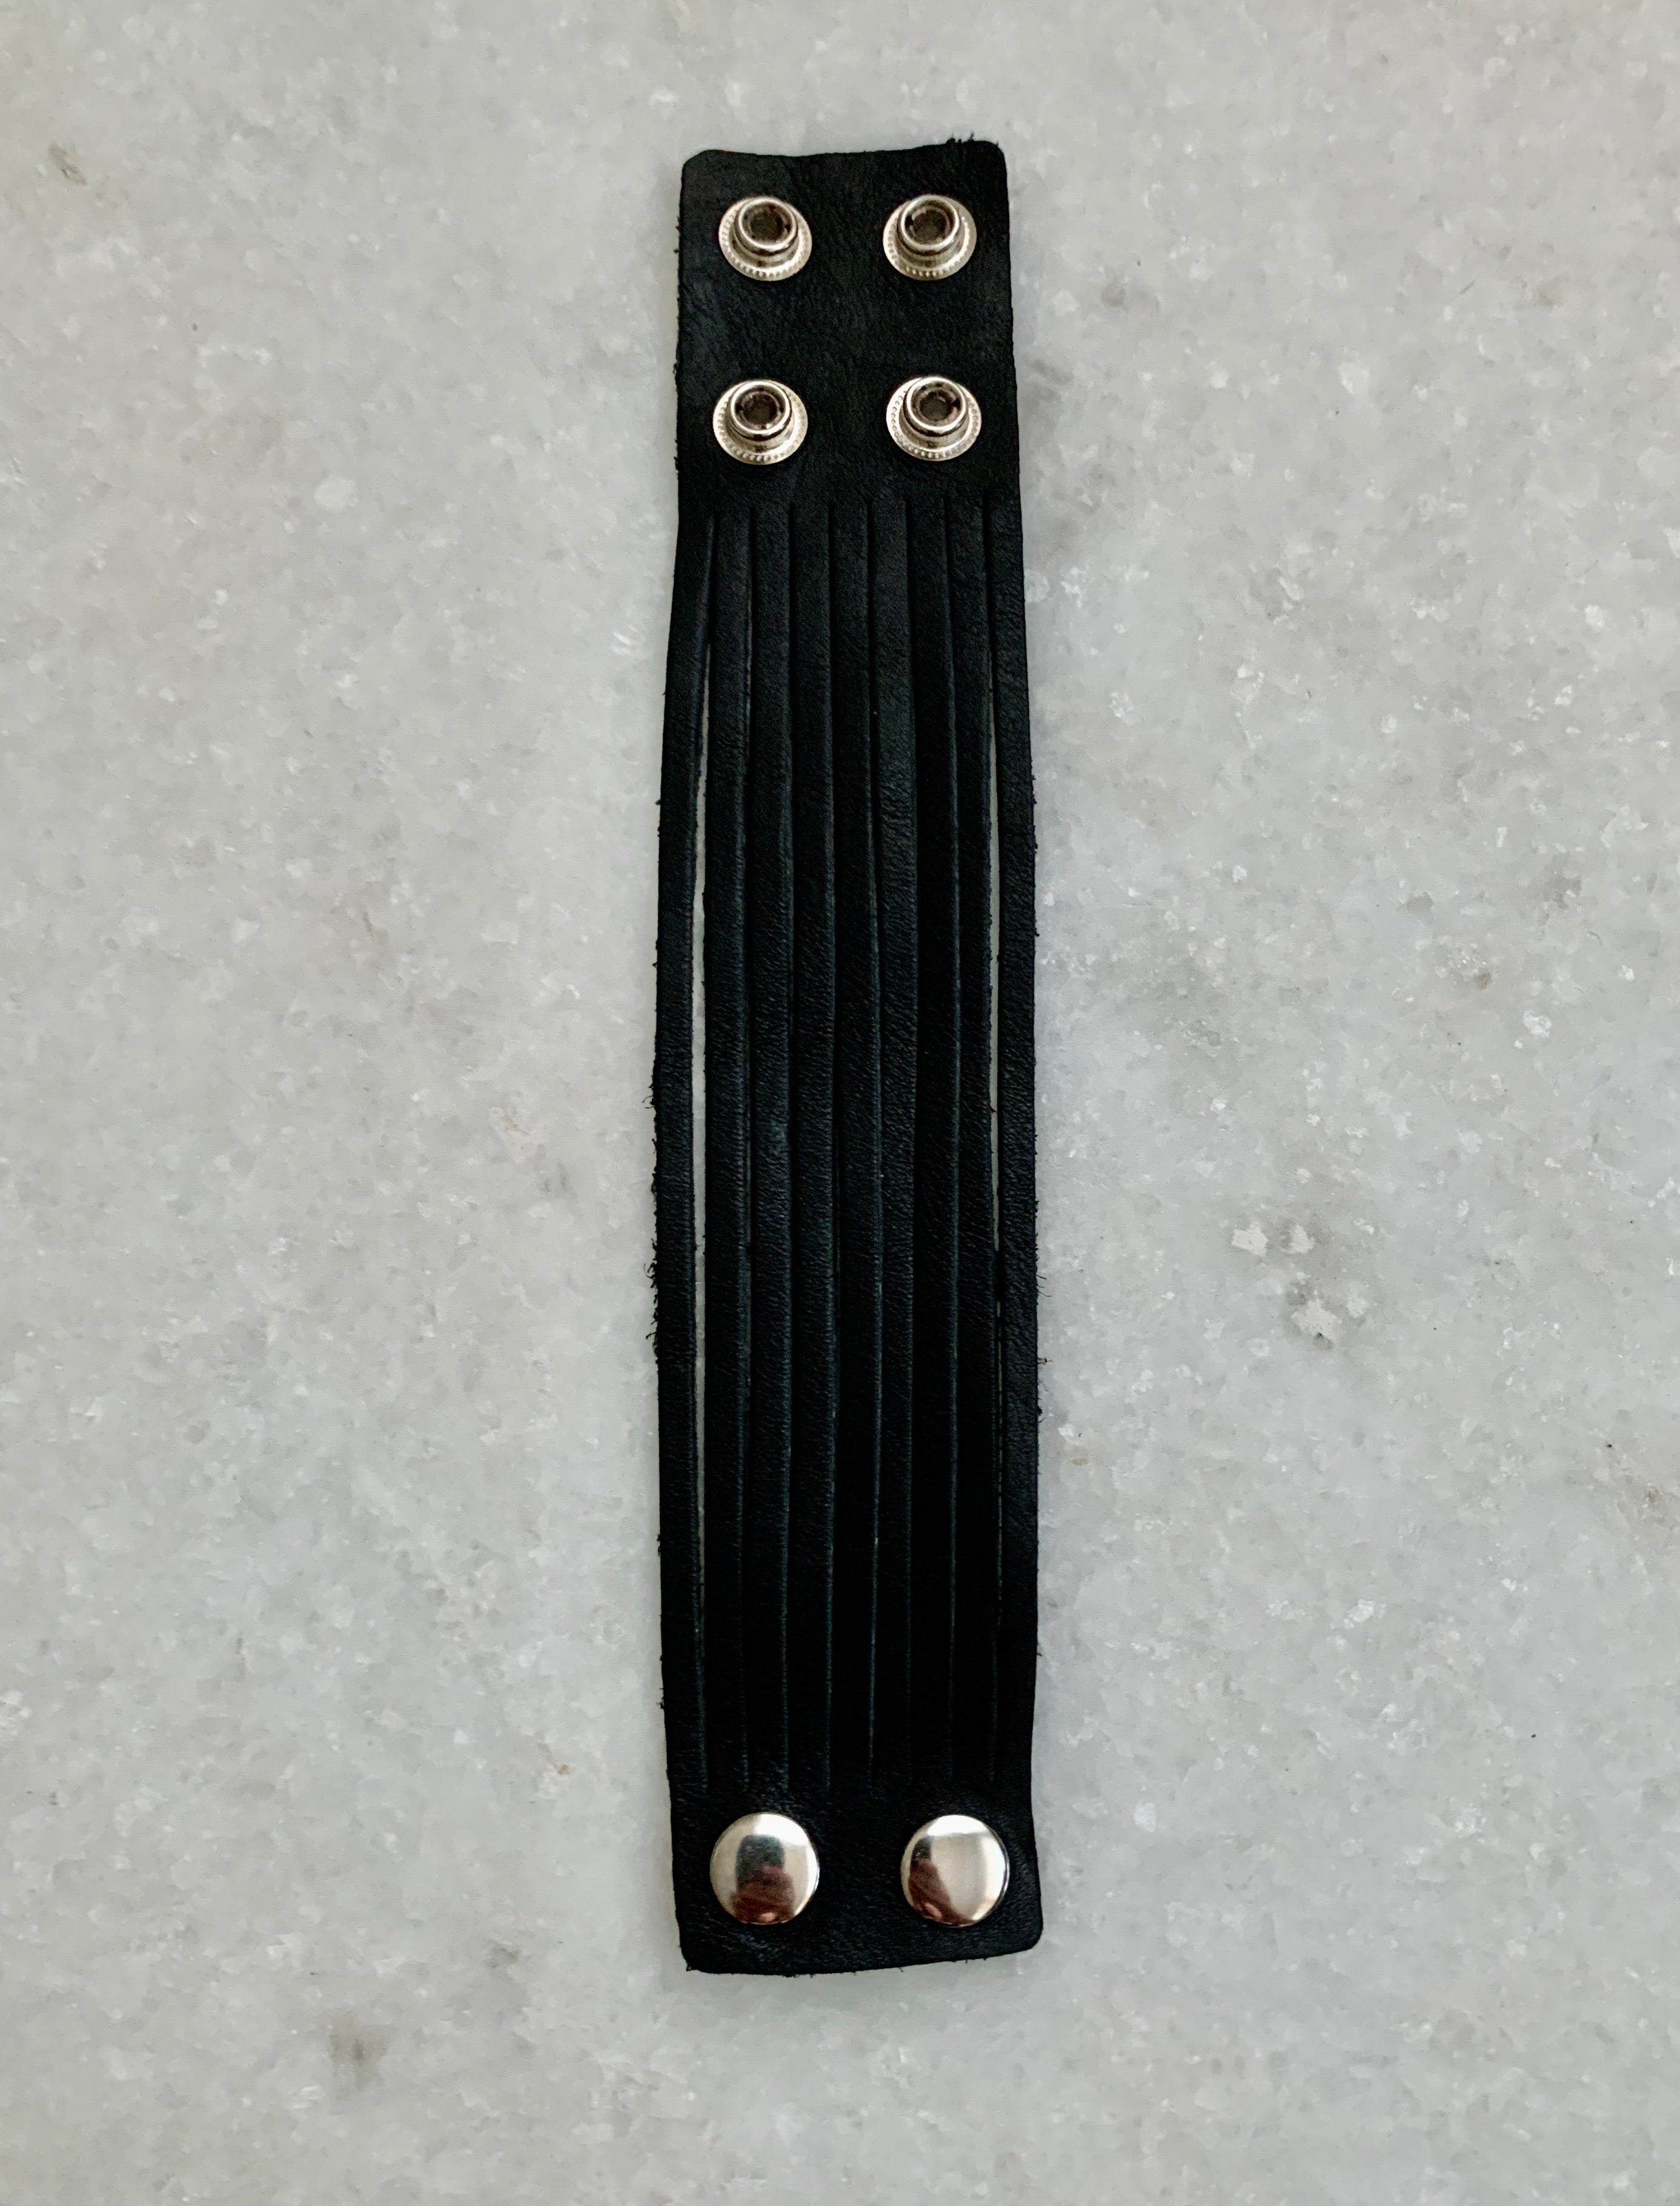 Black Leather Bracelet.